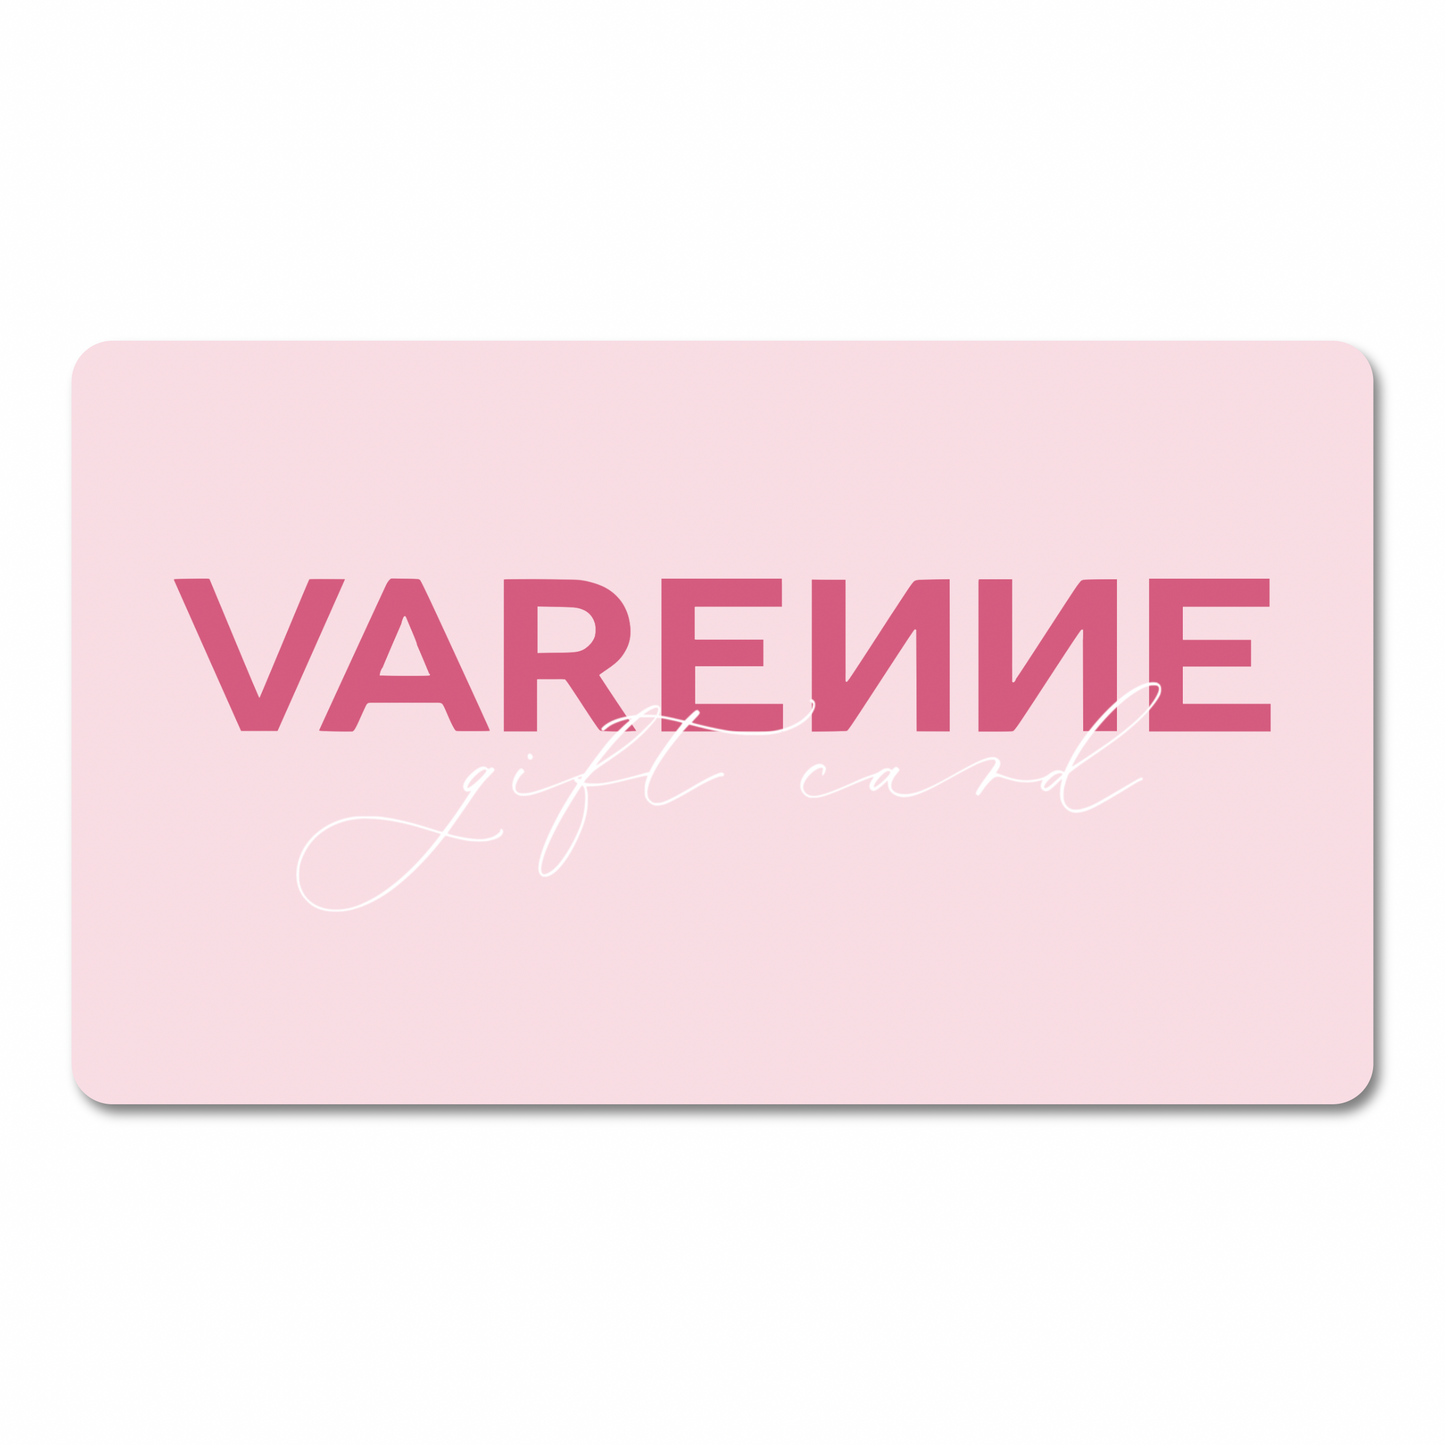 VARENNE GIFT CARD